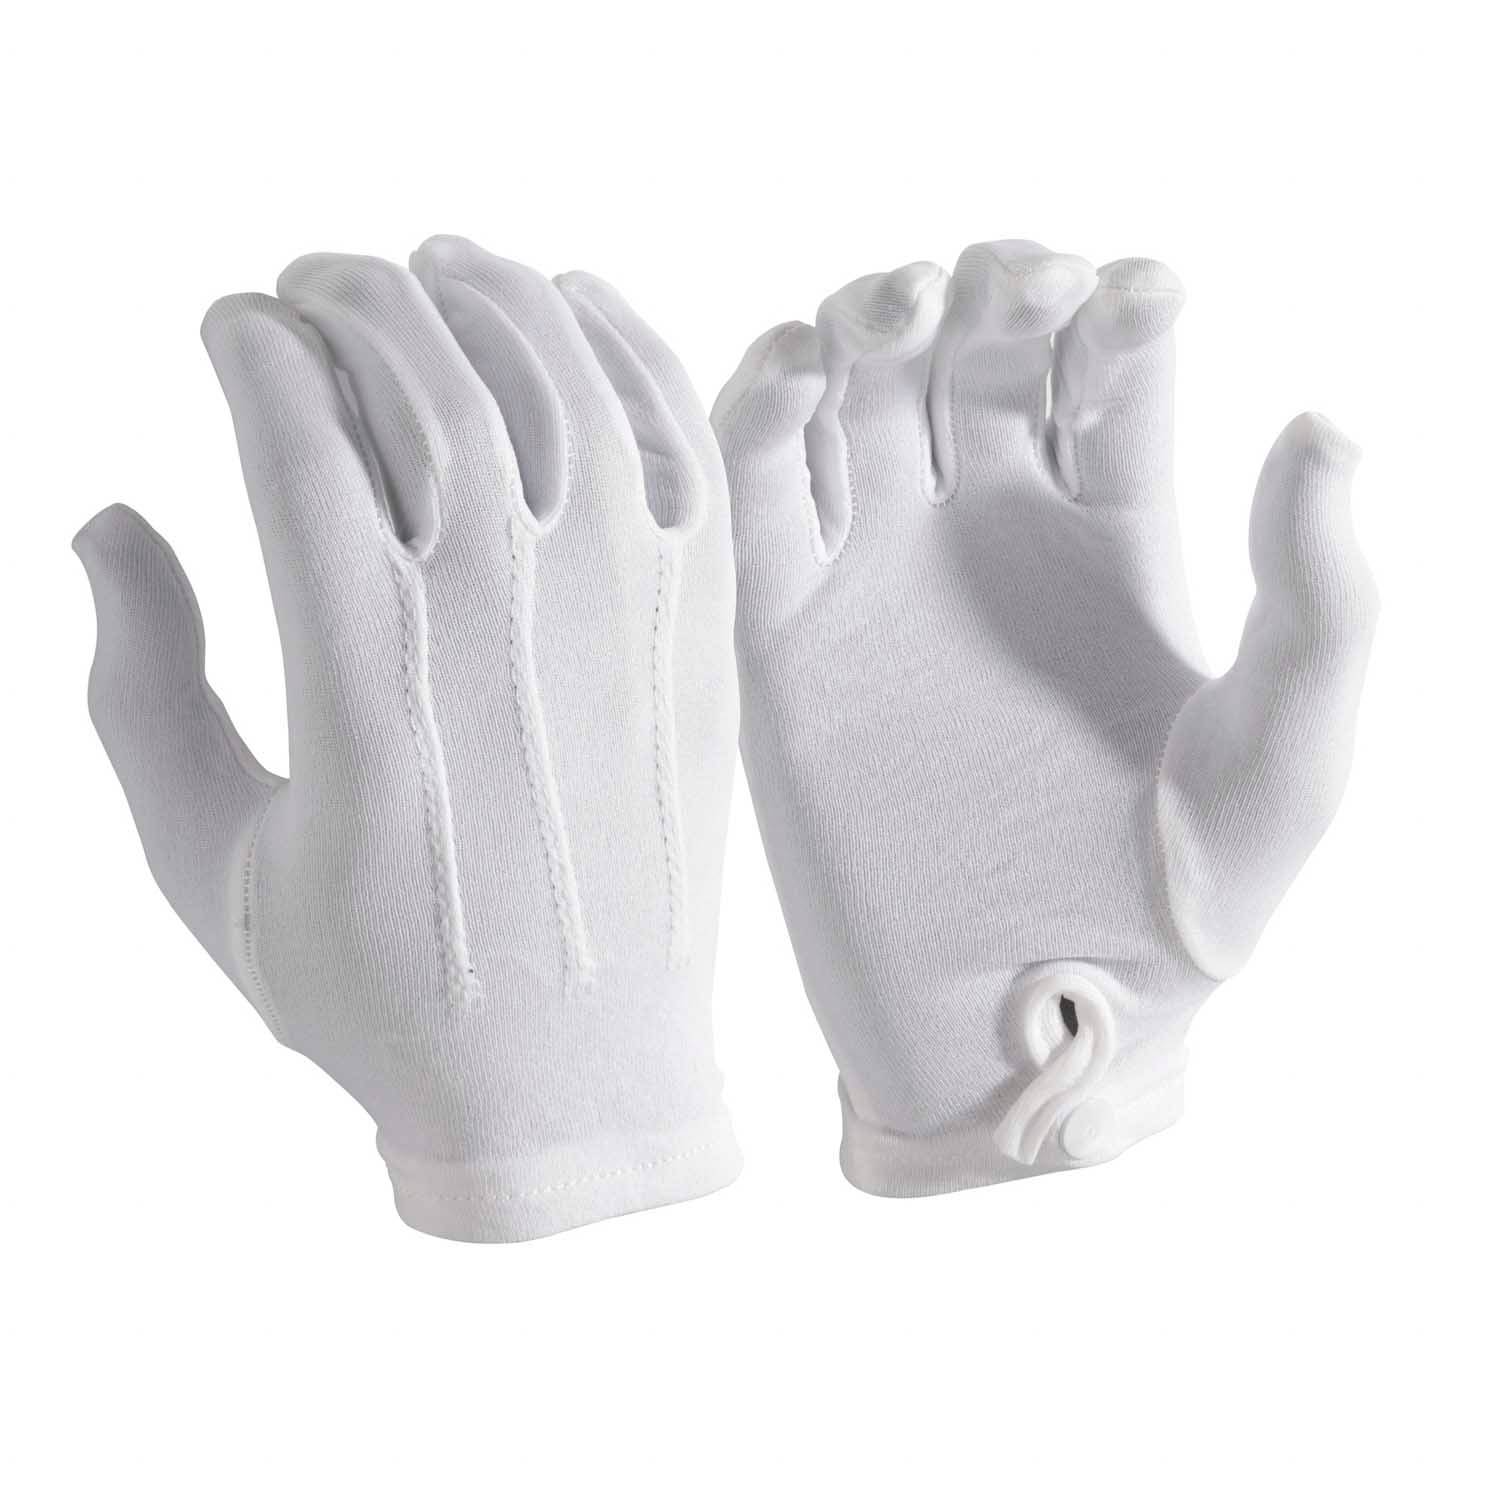 George Glove Co. Women's Nylon Parade Gloves w/ Snaps